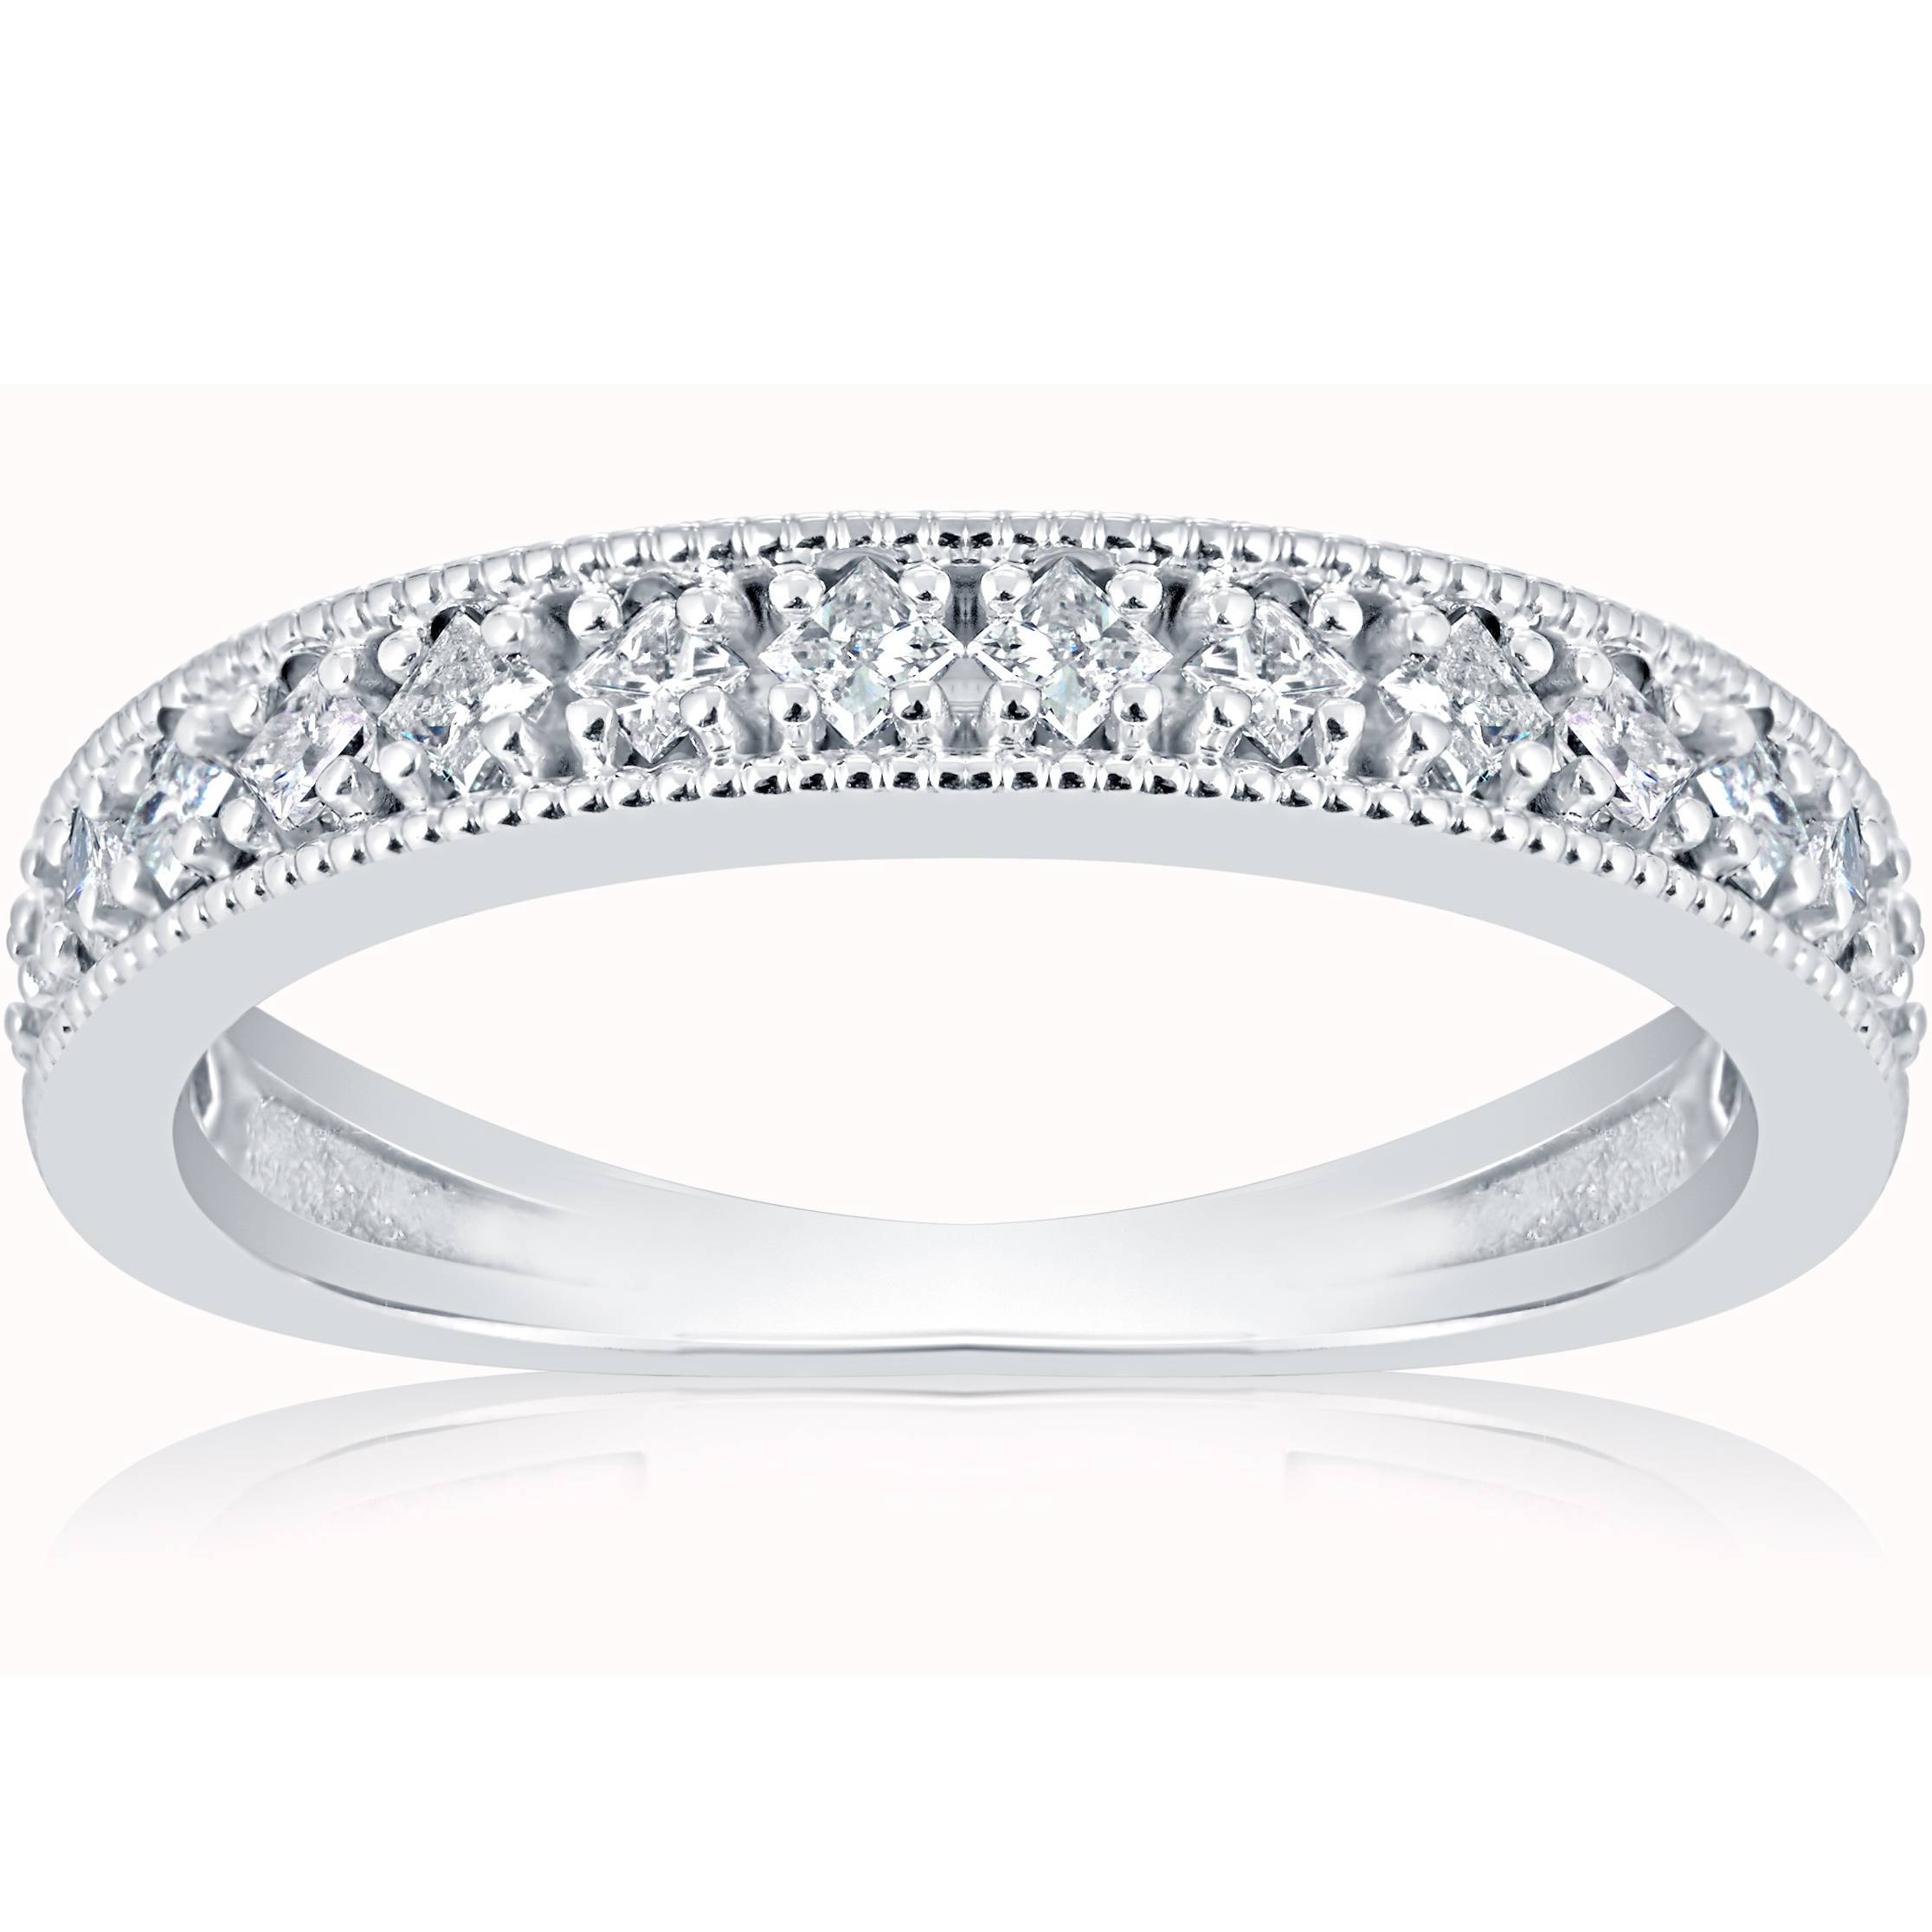 White Gold Princess Cut Wedding Rings
 1 3ct Princess Cut Diamond Wedding Ring White Gold